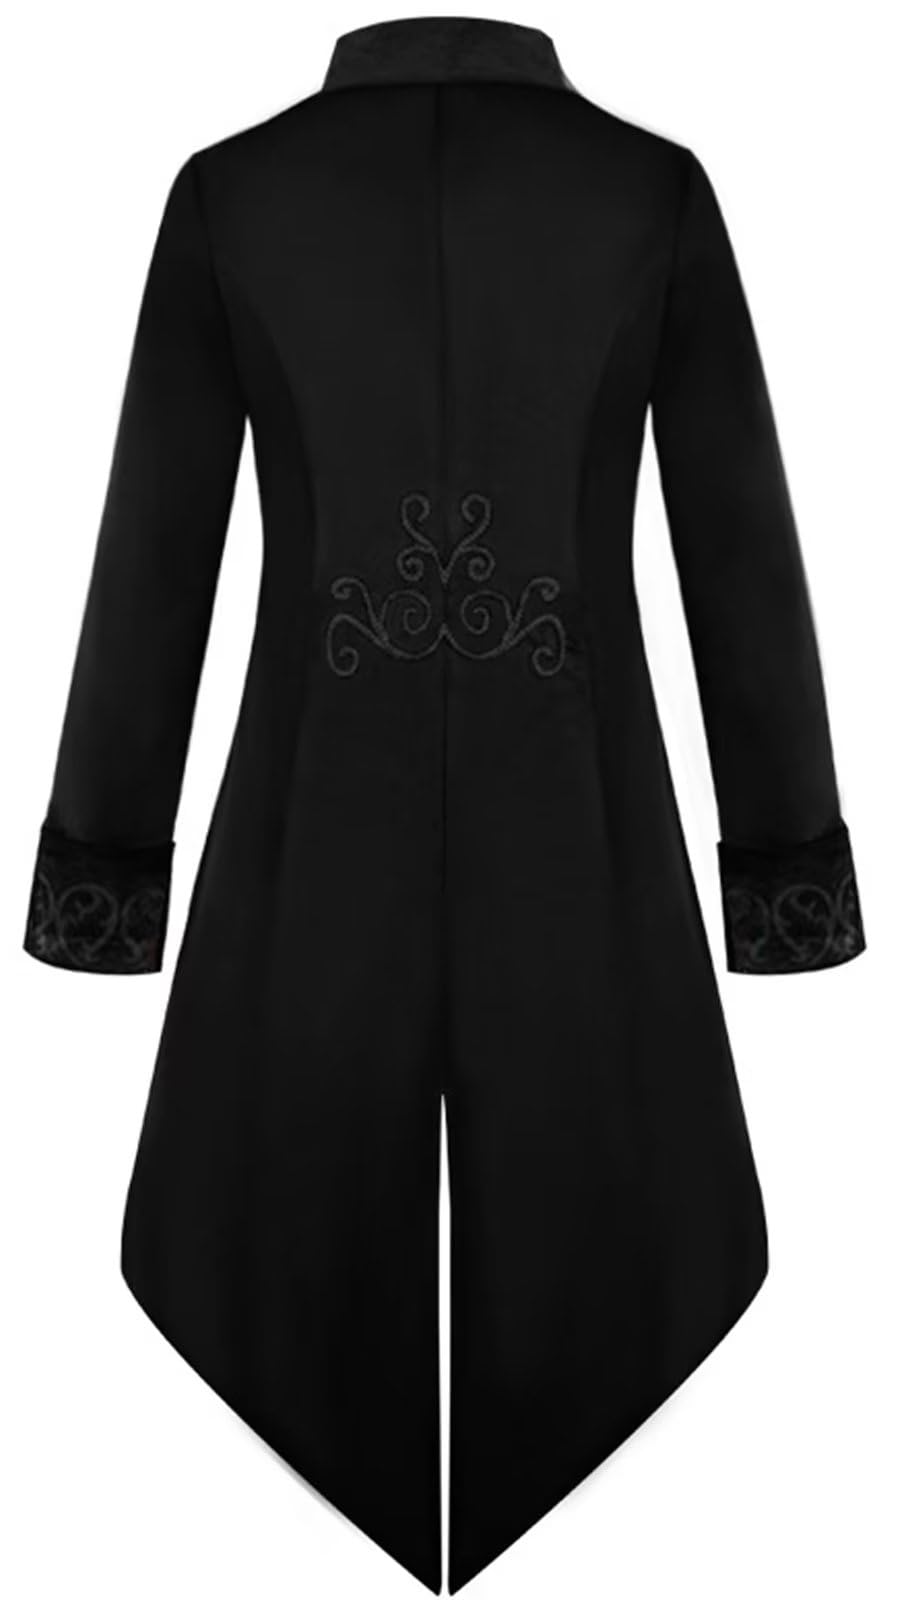 YUAKOU Men's Steampunk Vintage Tailcoat Jacket Gothic Victorian Frock Coat Uniform Halloween Costume